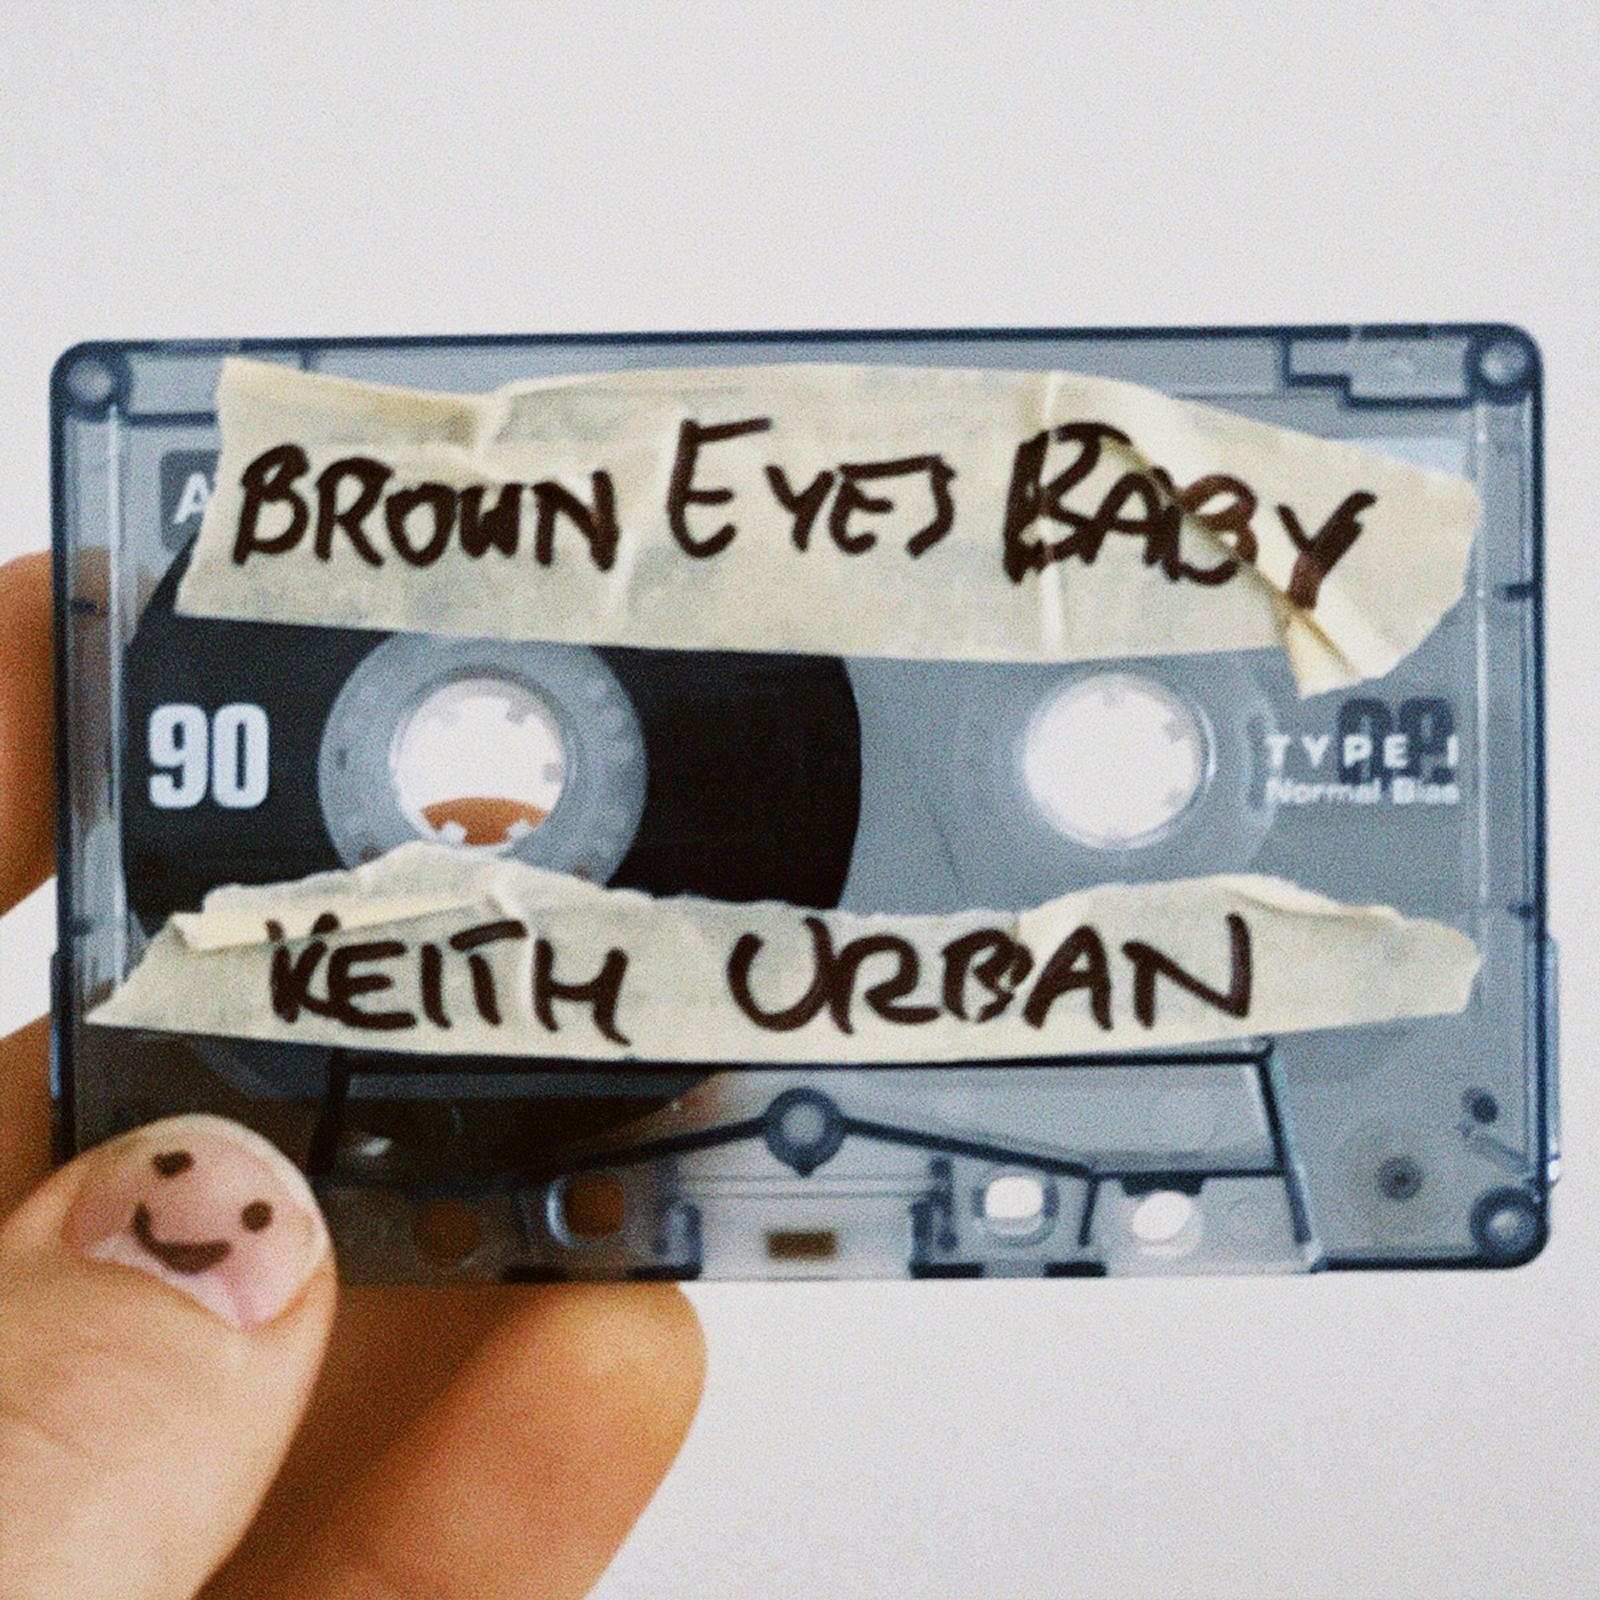 Keith Urban Brown Eyes Baby cover artwork